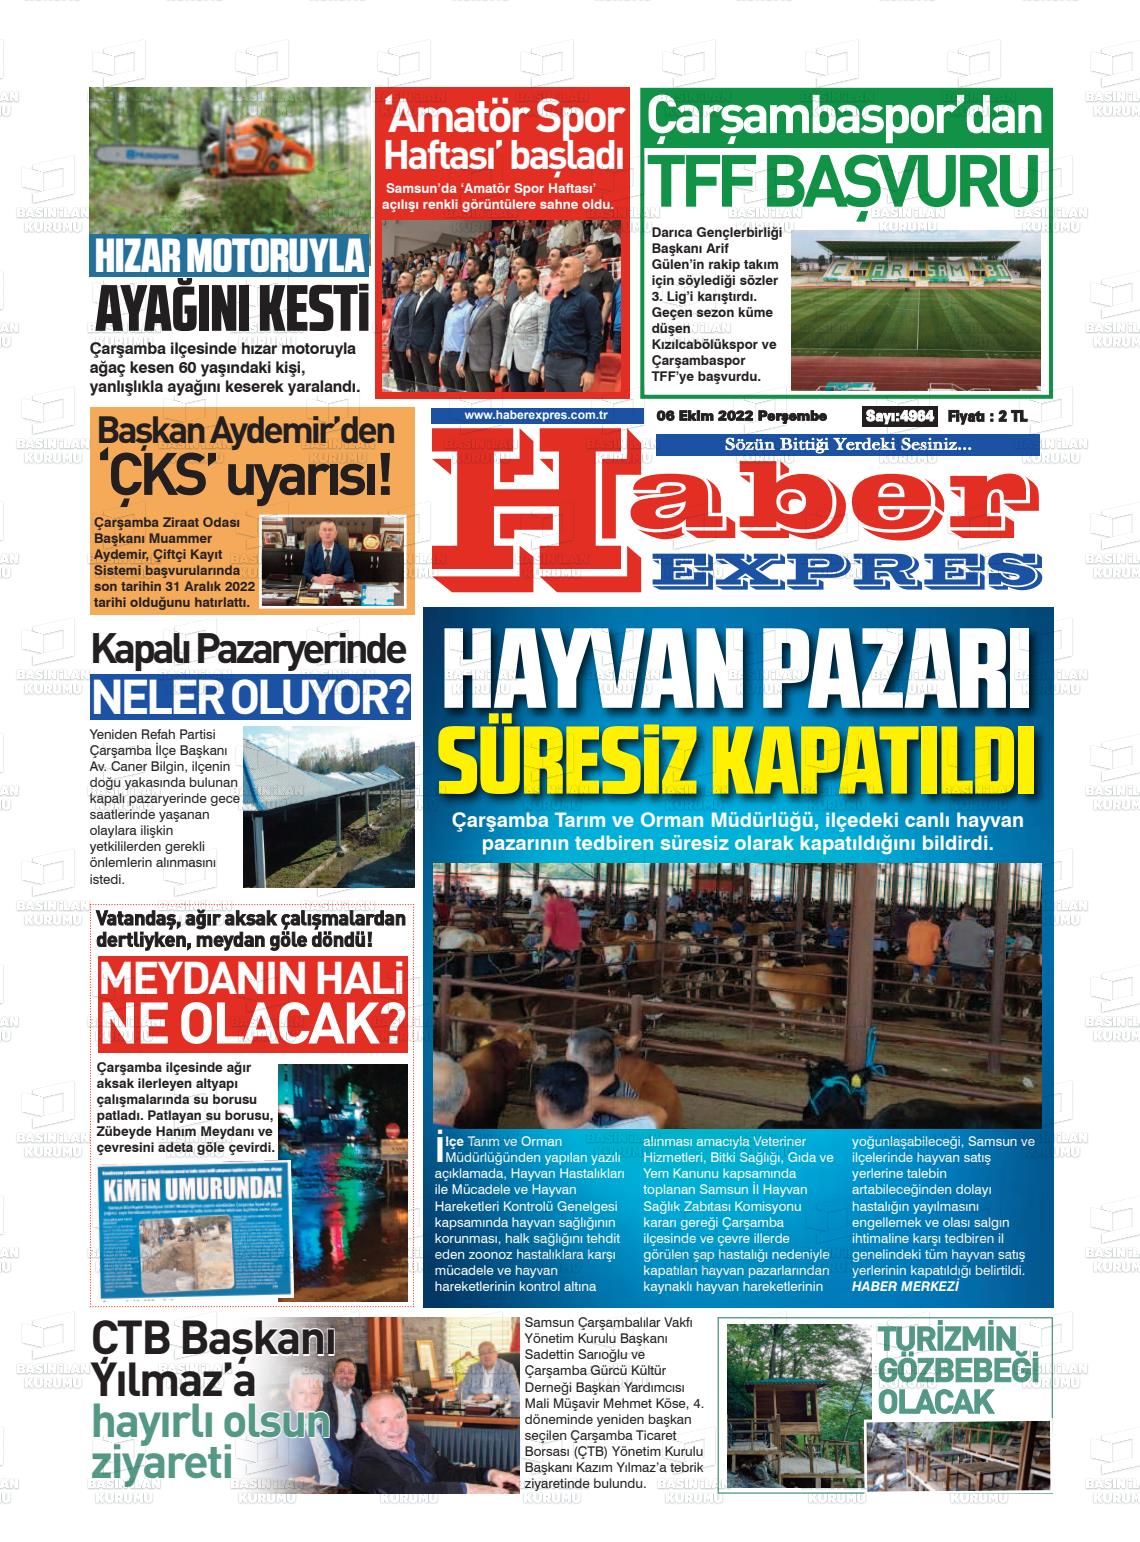 06 Ekim 2022 Haber Expres Gazete Manşeti